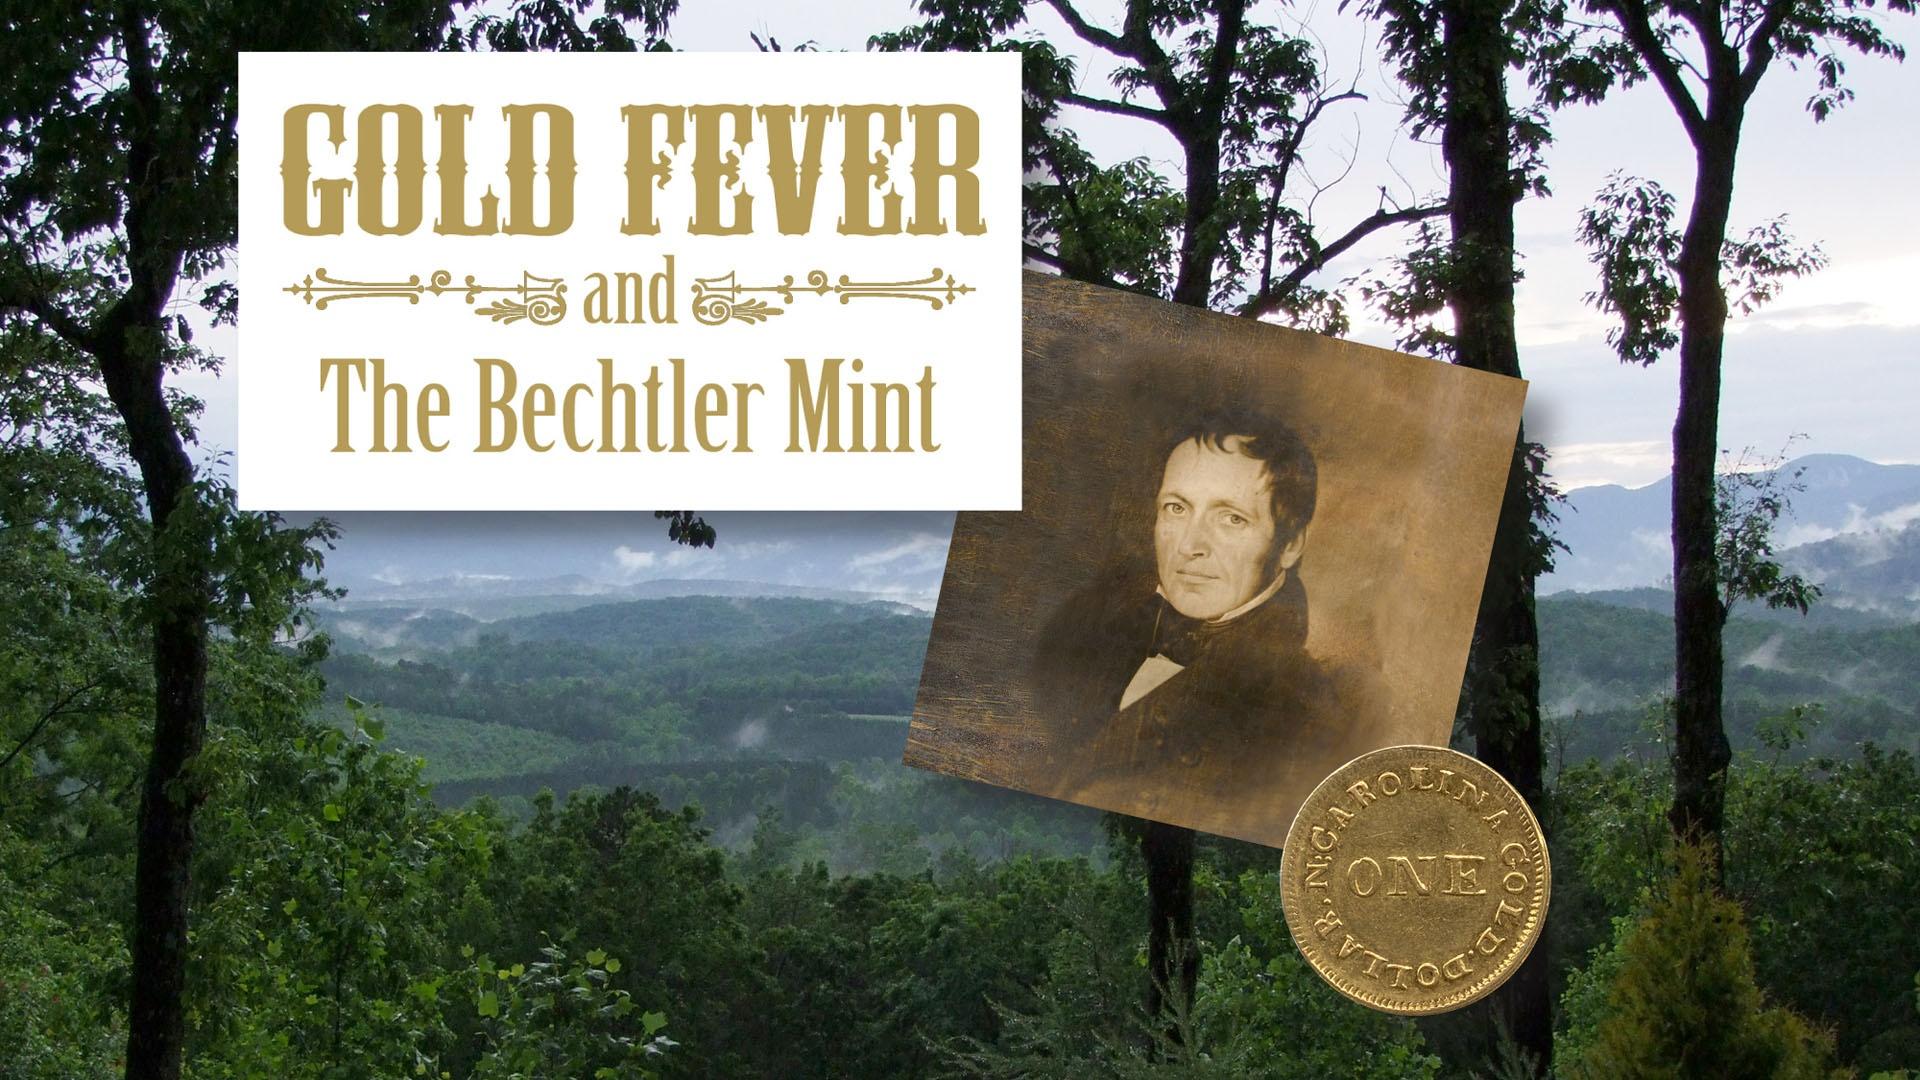 Gold Fever and The Bechtler Mint